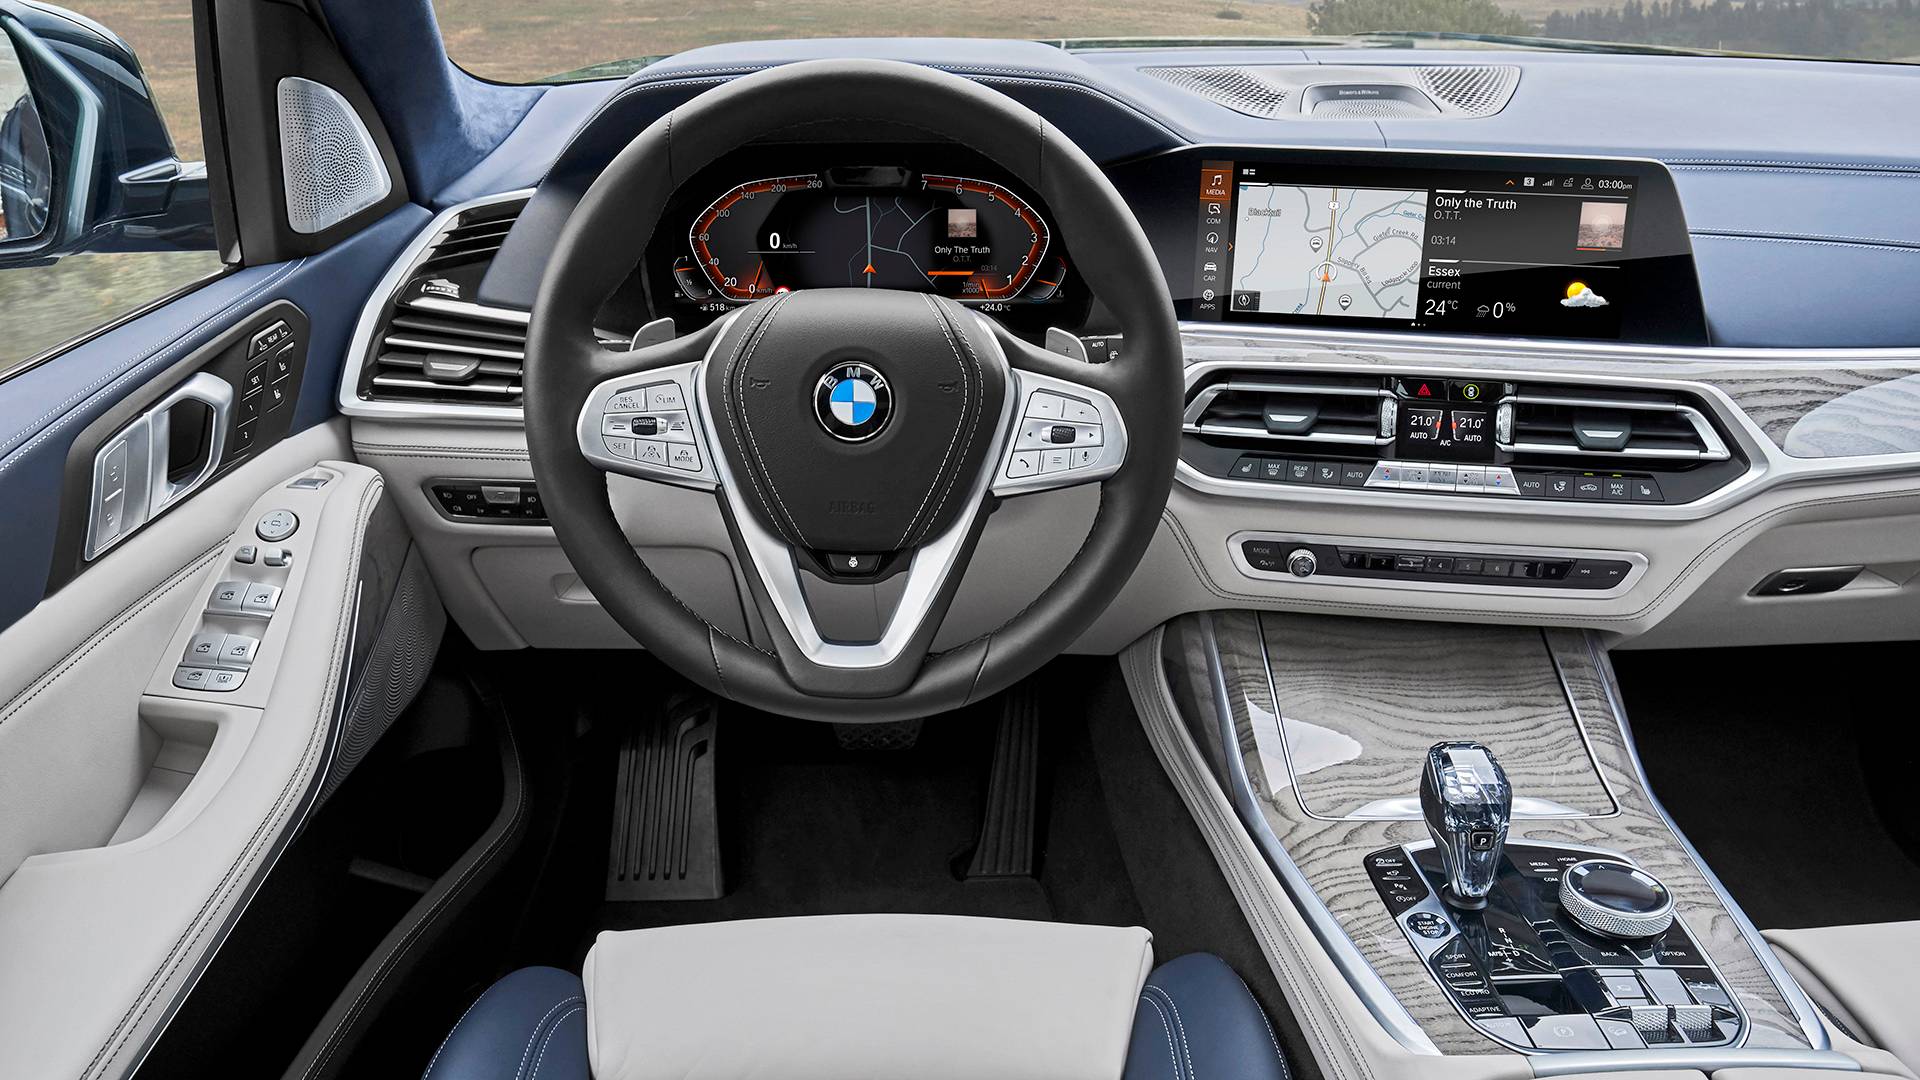 BMW yeni amiral gemisi SUV'sini tanıttı: 2019 BMW X7 ile tanışın